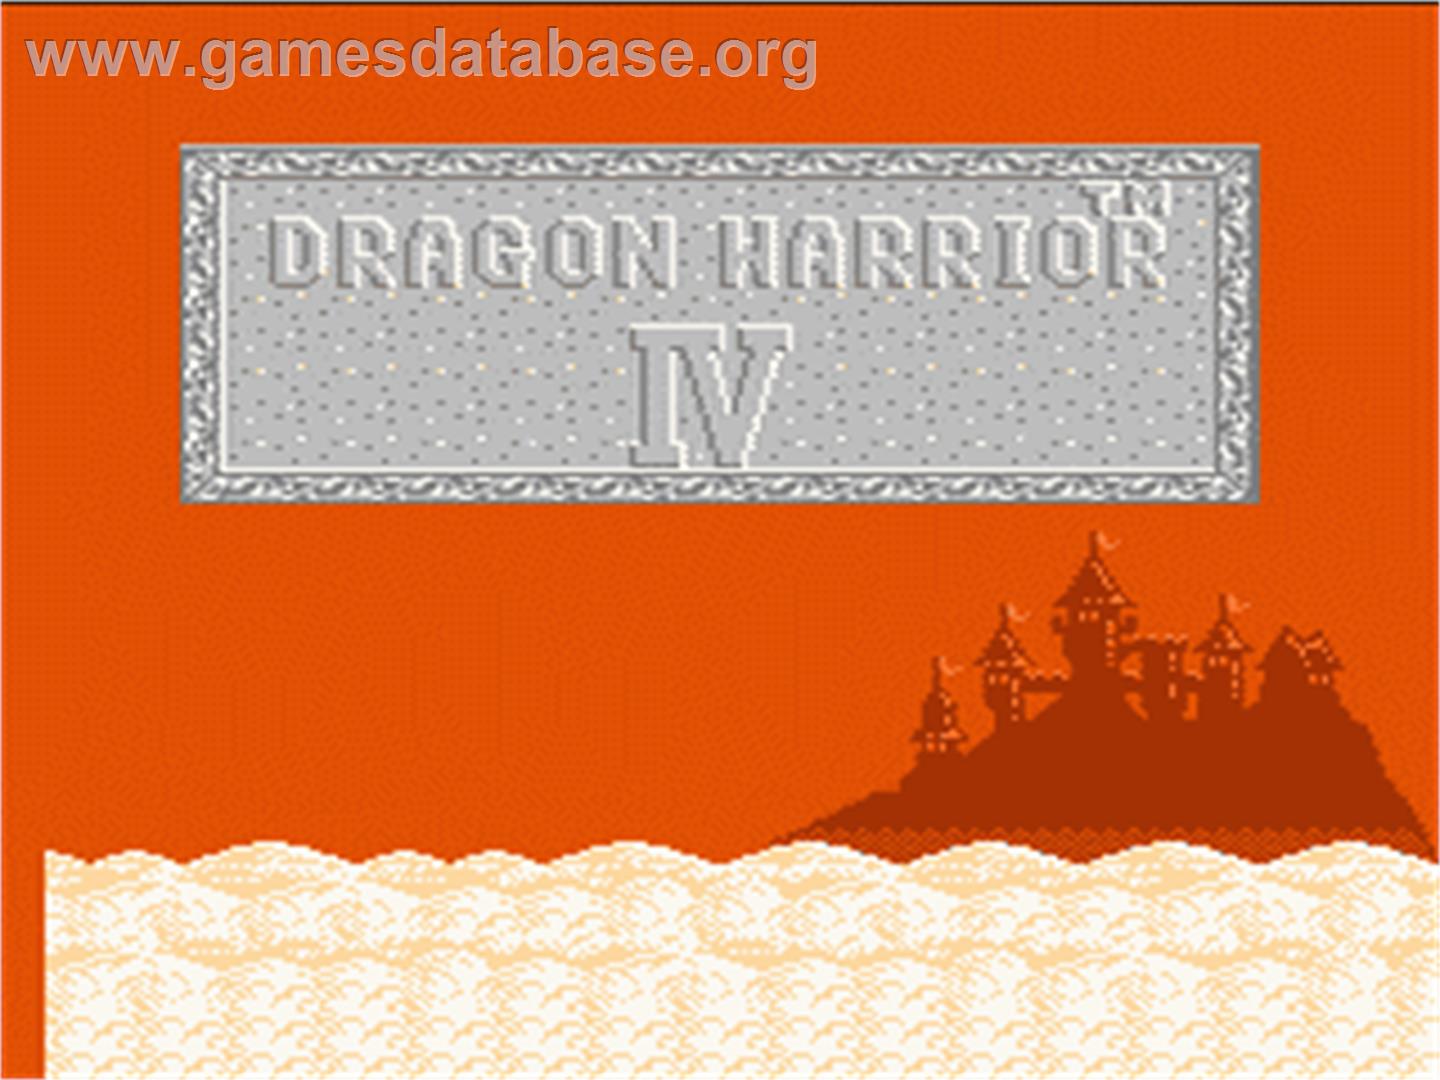 Dragon Warrior 4 - Nintendo NES - Artwork - Title Screen